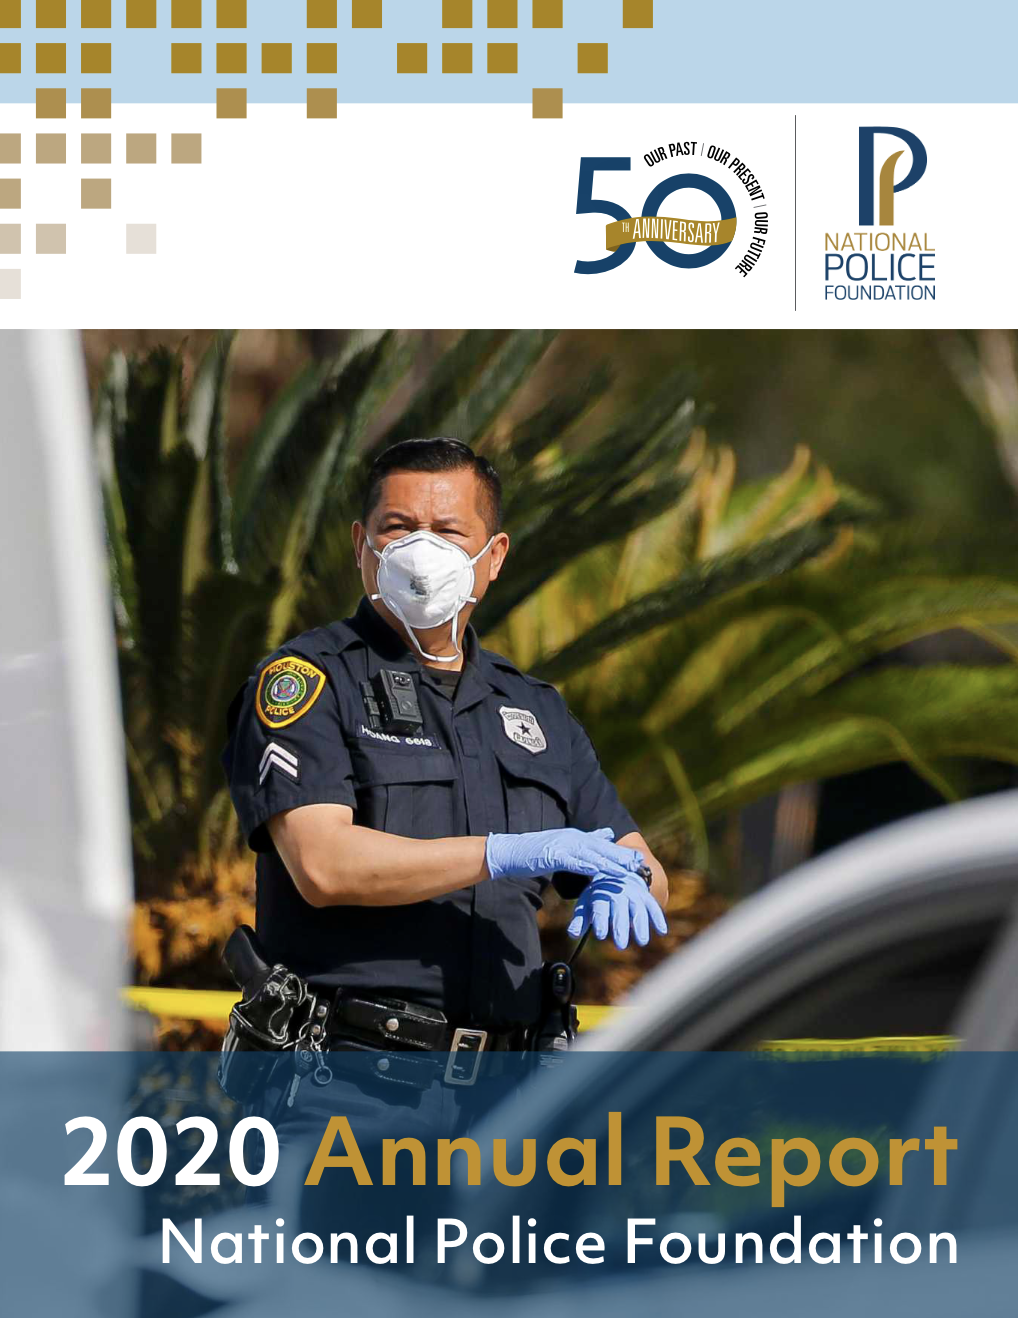 2020 Annual report cover